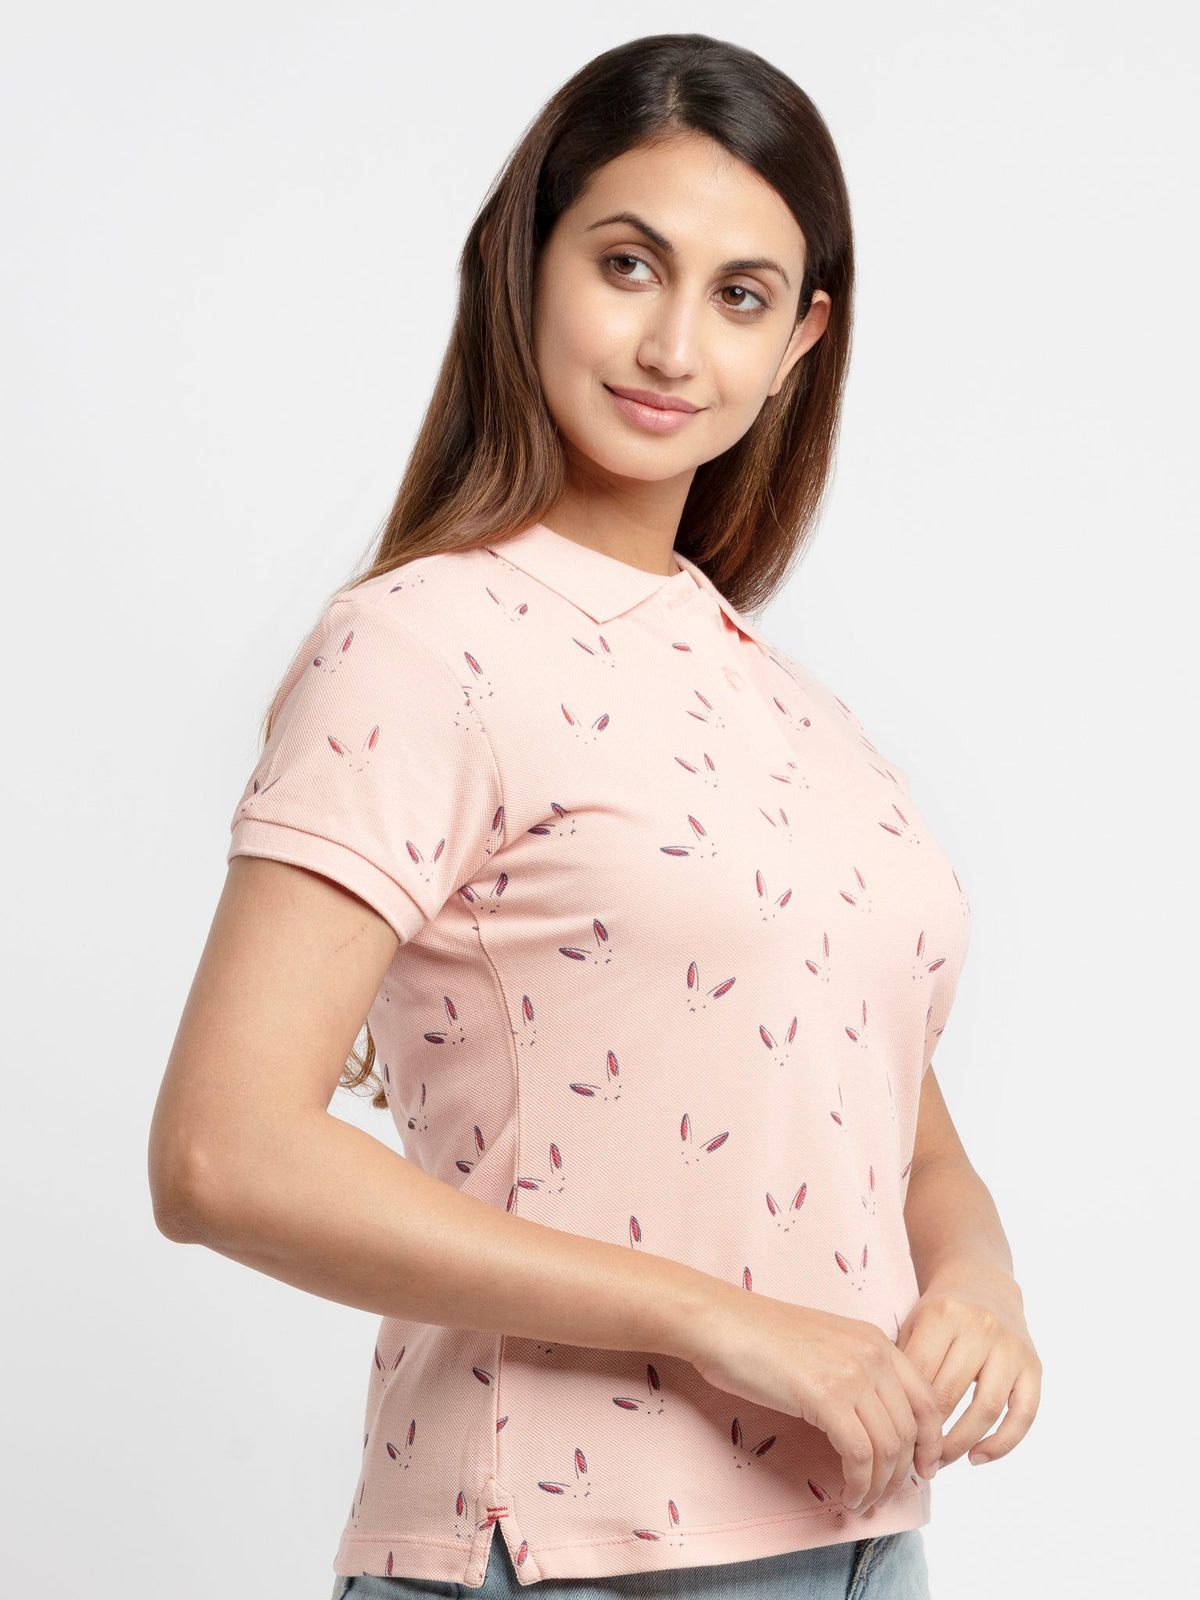 Women's Printed Polo T-Shirt